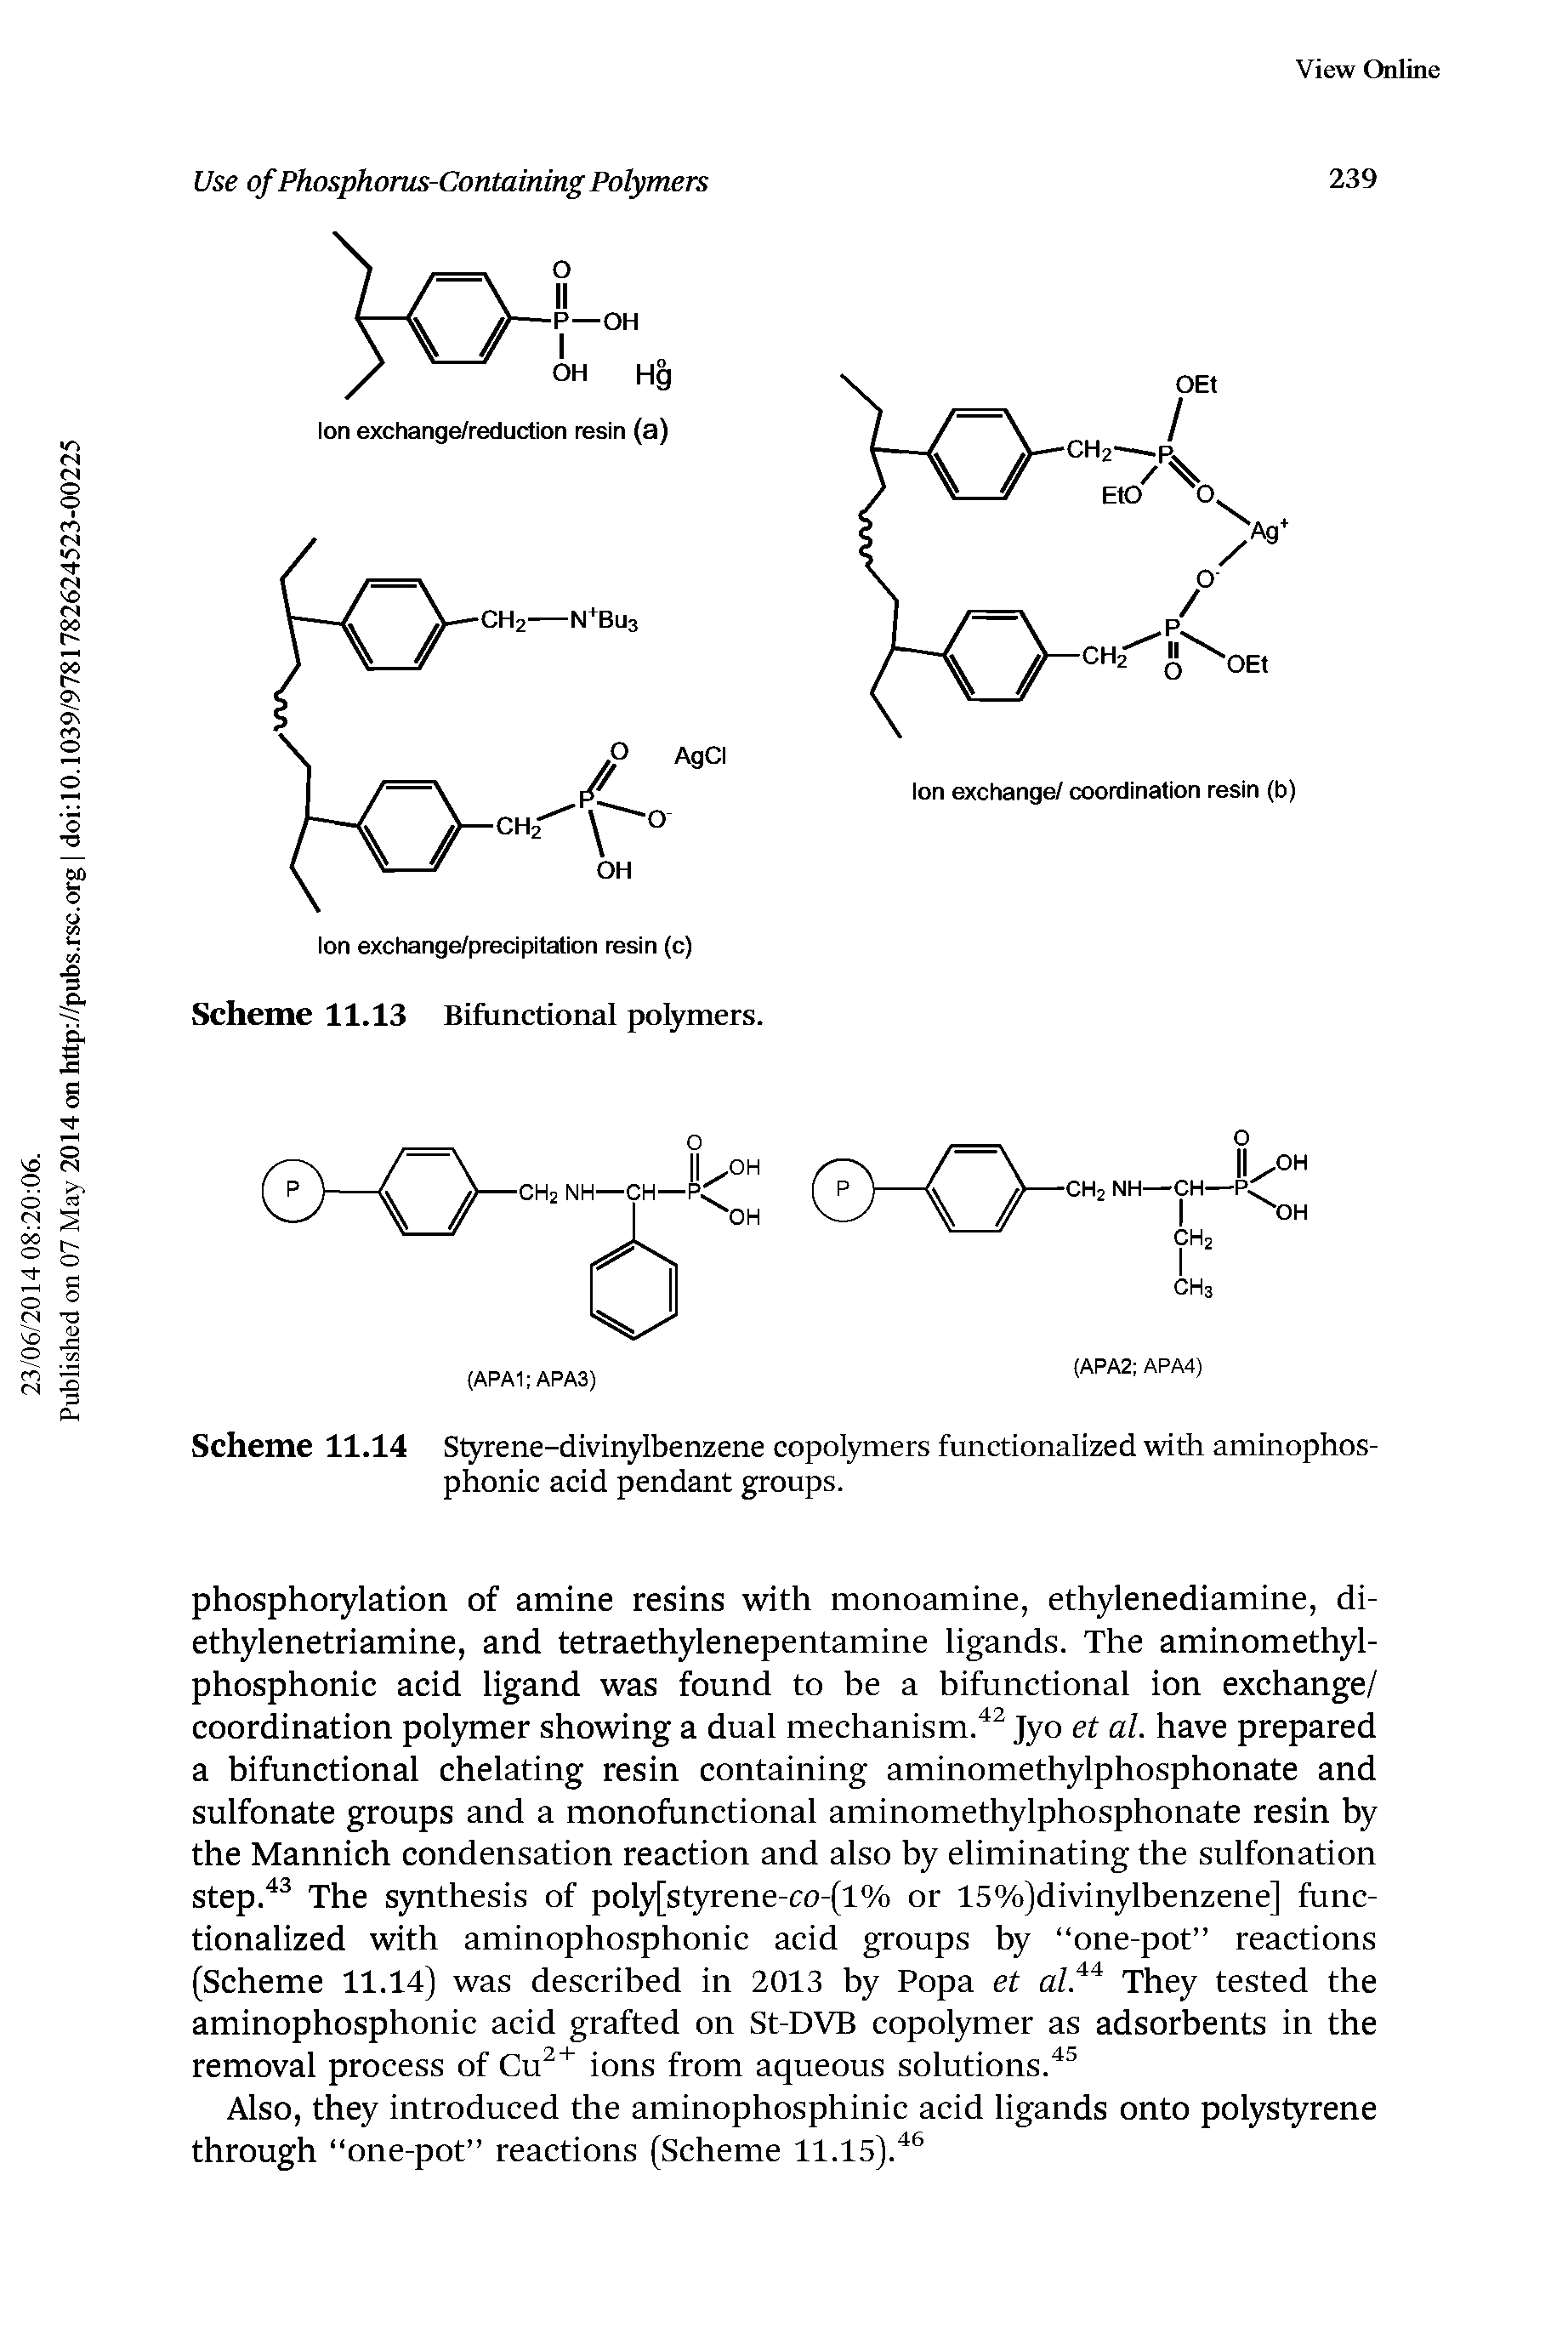 Scheme 11.14 Styrene-divinylbenzene copolymers functionalized with aminophos-phonic acid pendant groups.